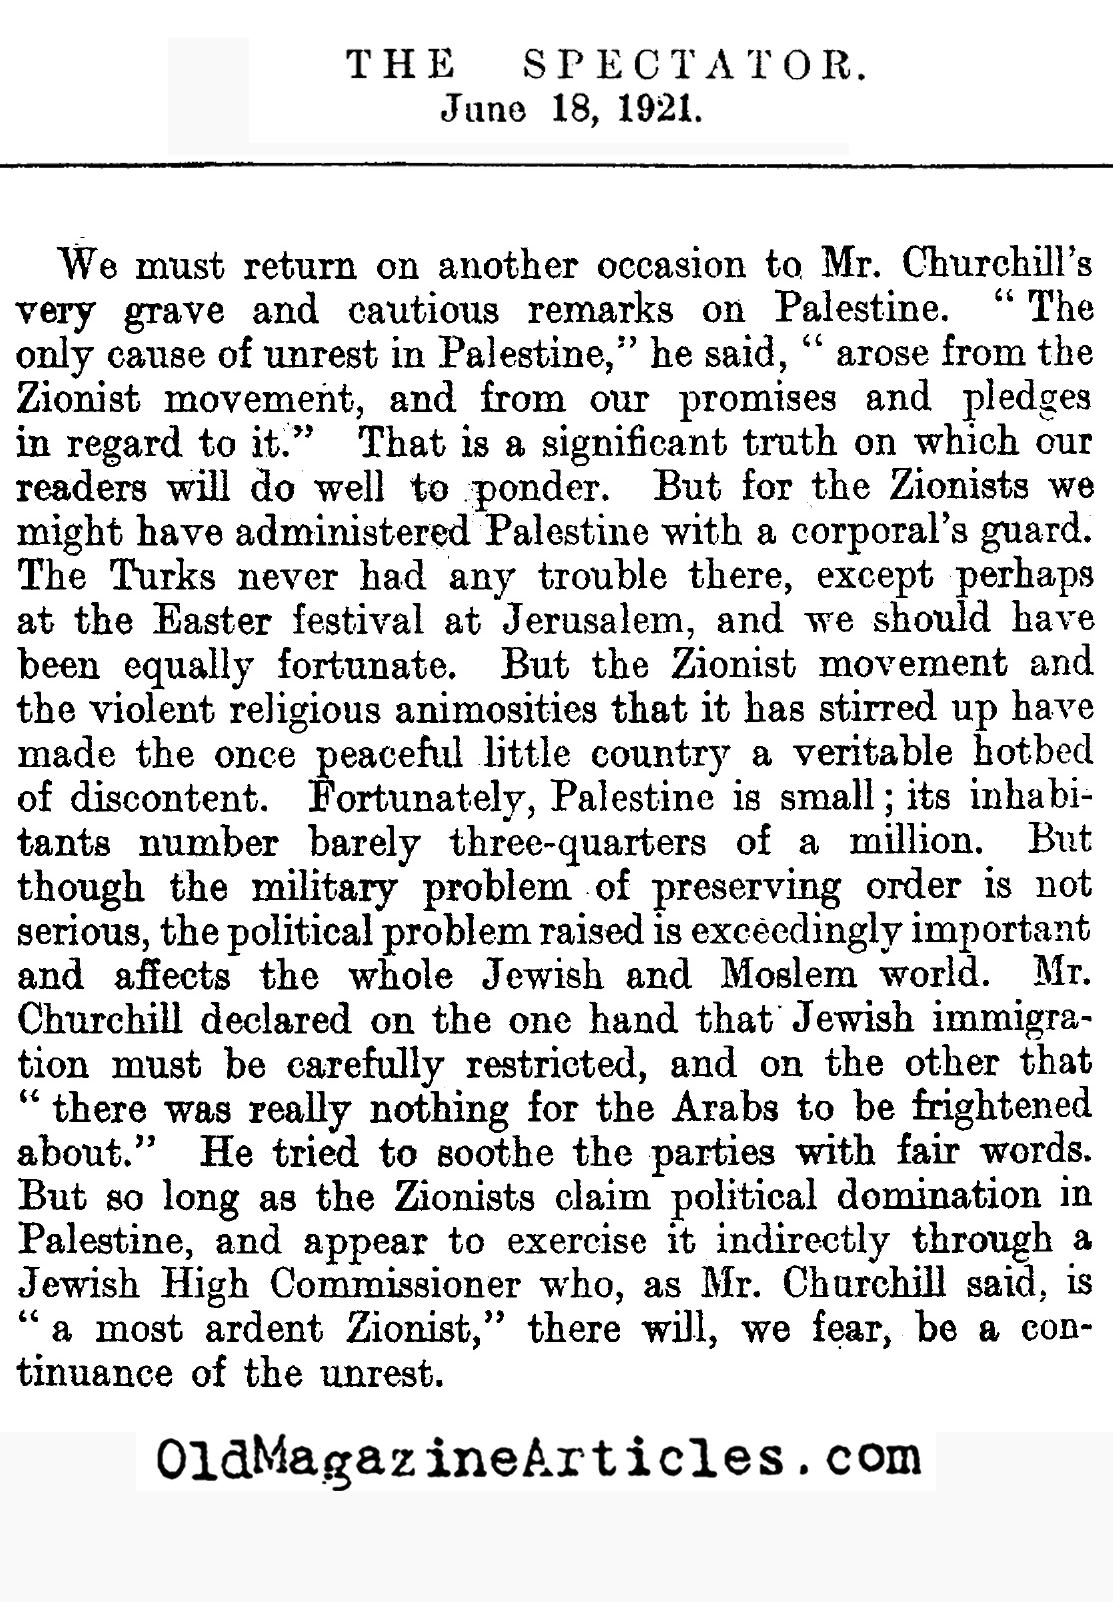 British Attempt to Prevent Jewish Growth in Palestine (The Spectator, 1921)